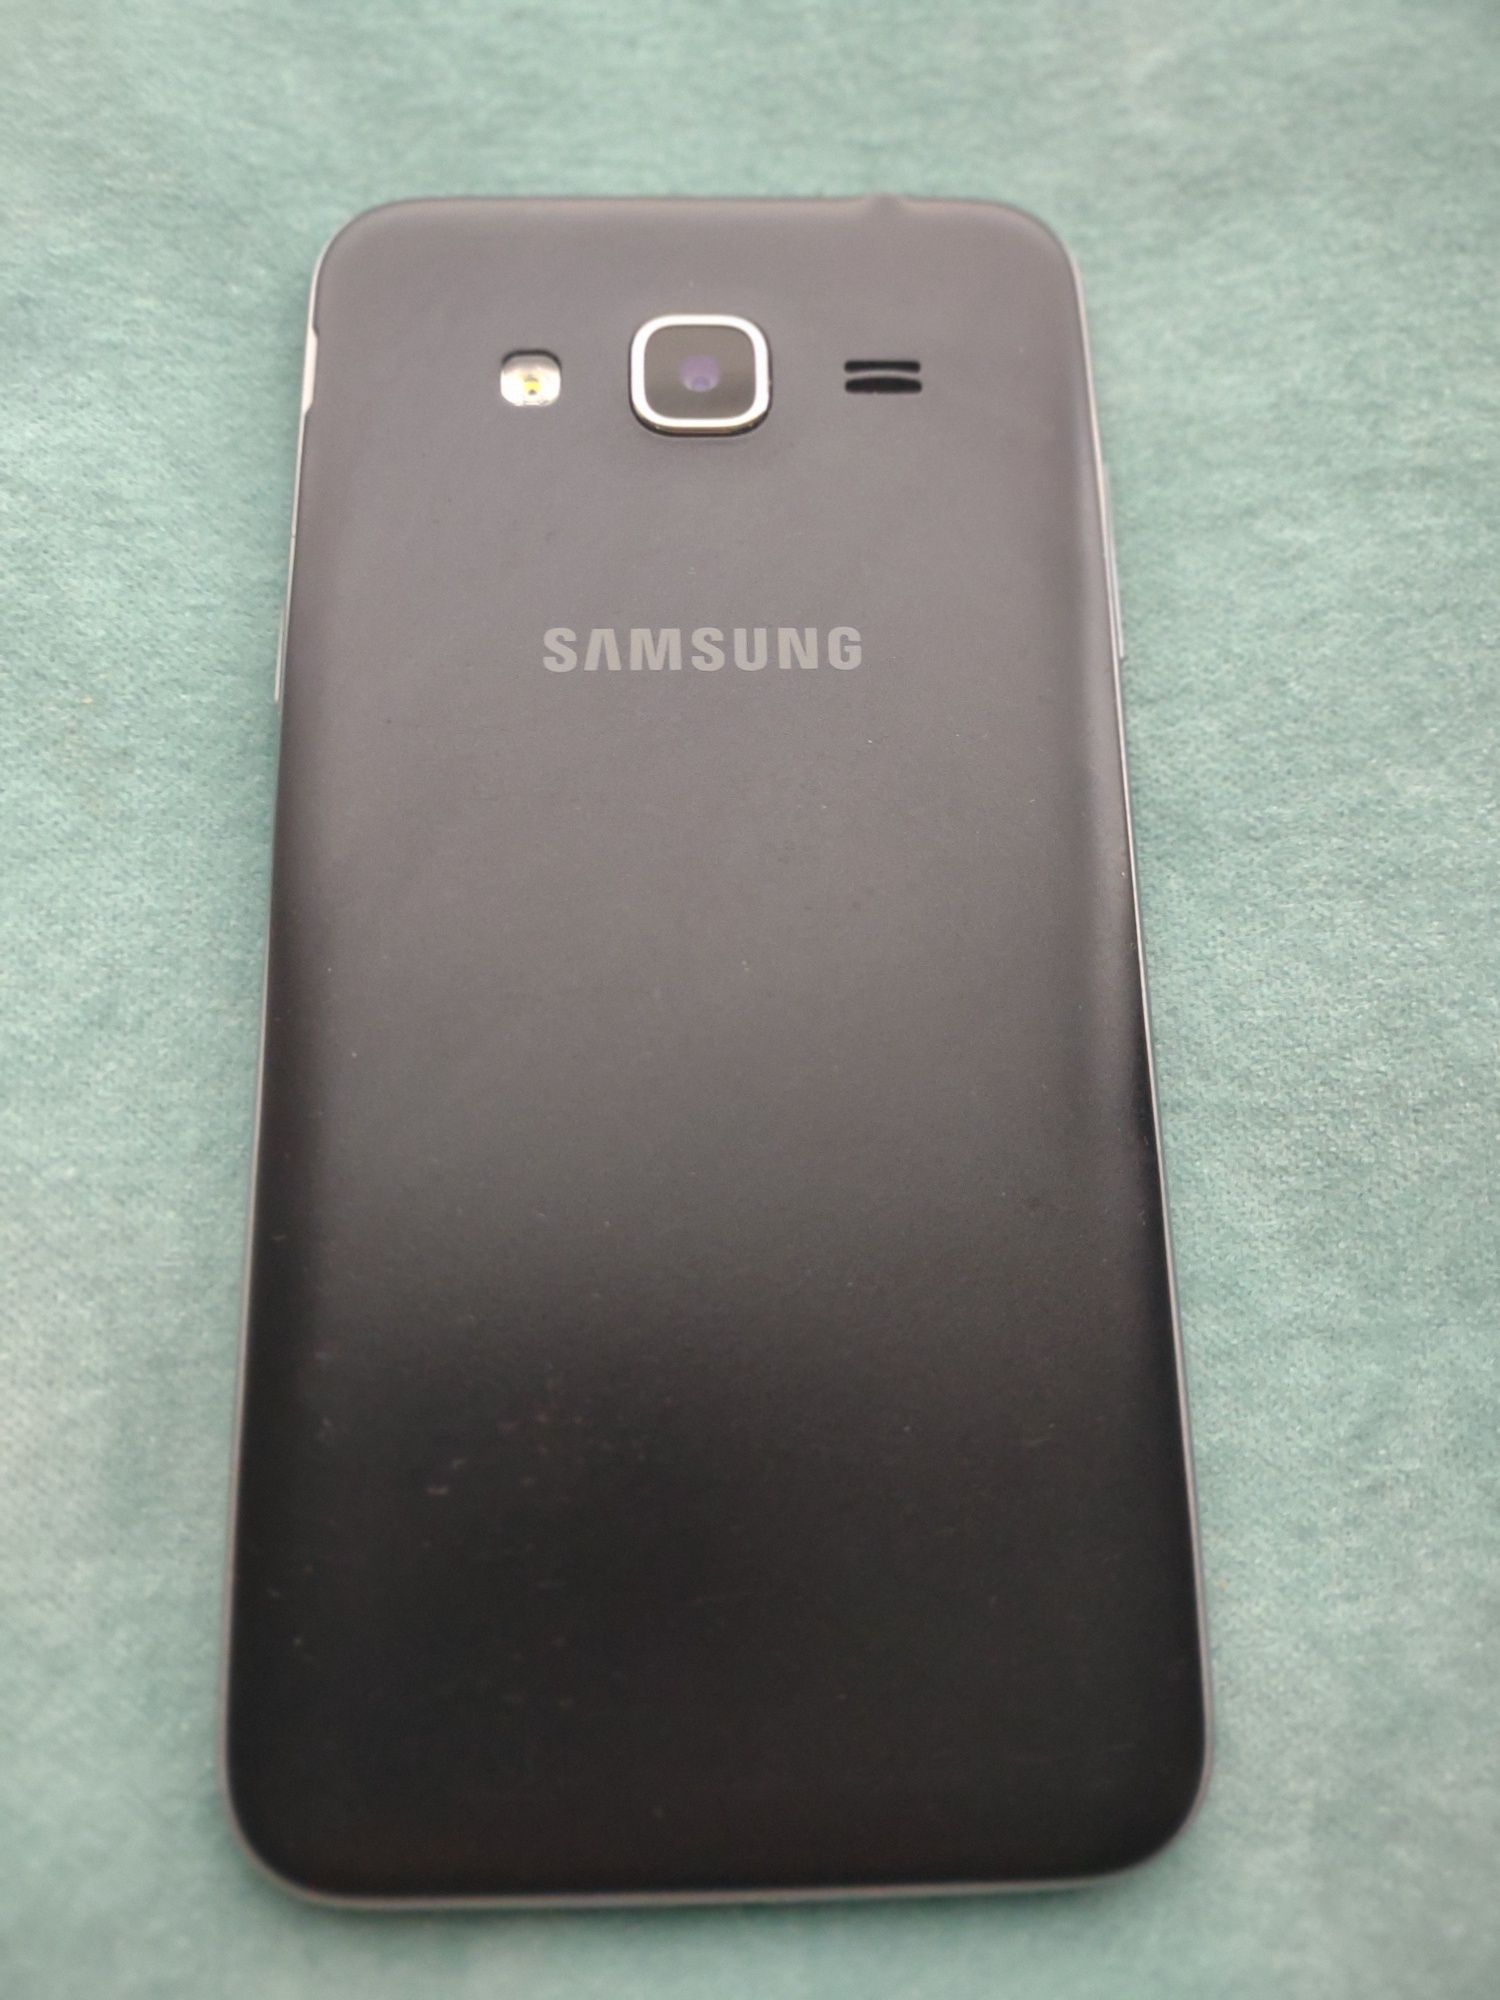 Samsung Galaxy J3 1.5/8 GB Idealny